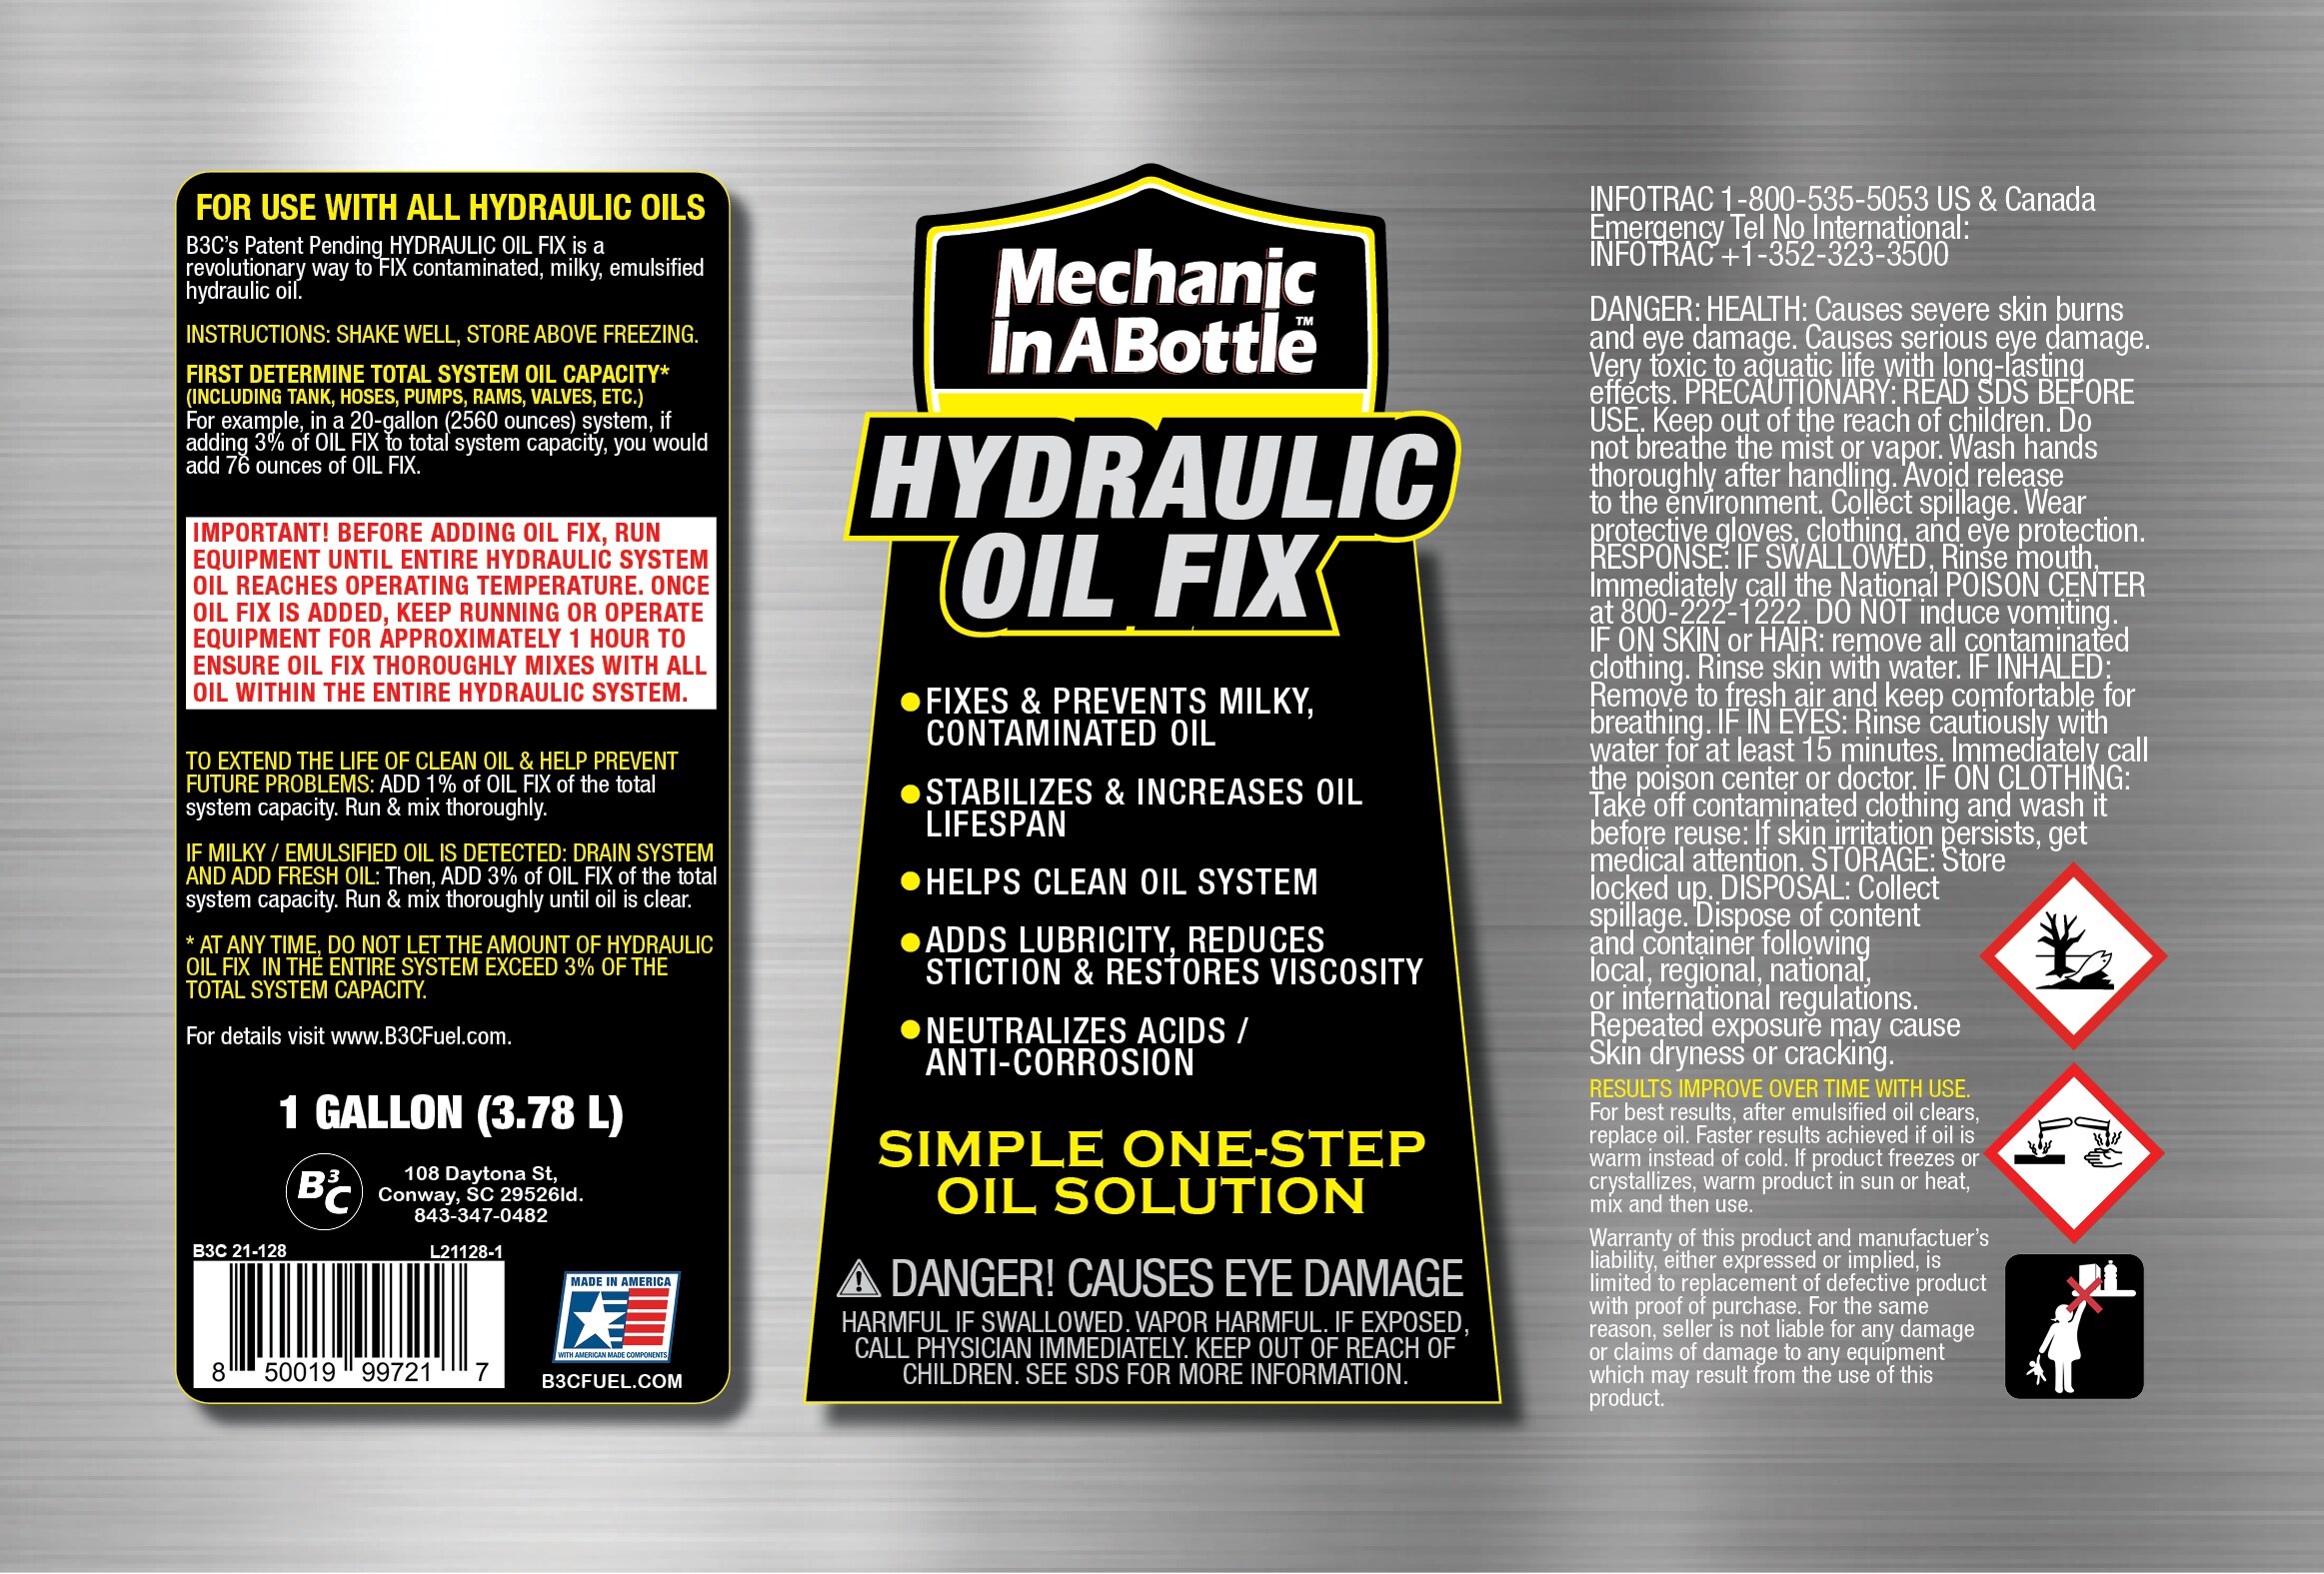 Hydraulic Oil Fix & Stabilizer-24 oz. Bottle - Centerline Distribution